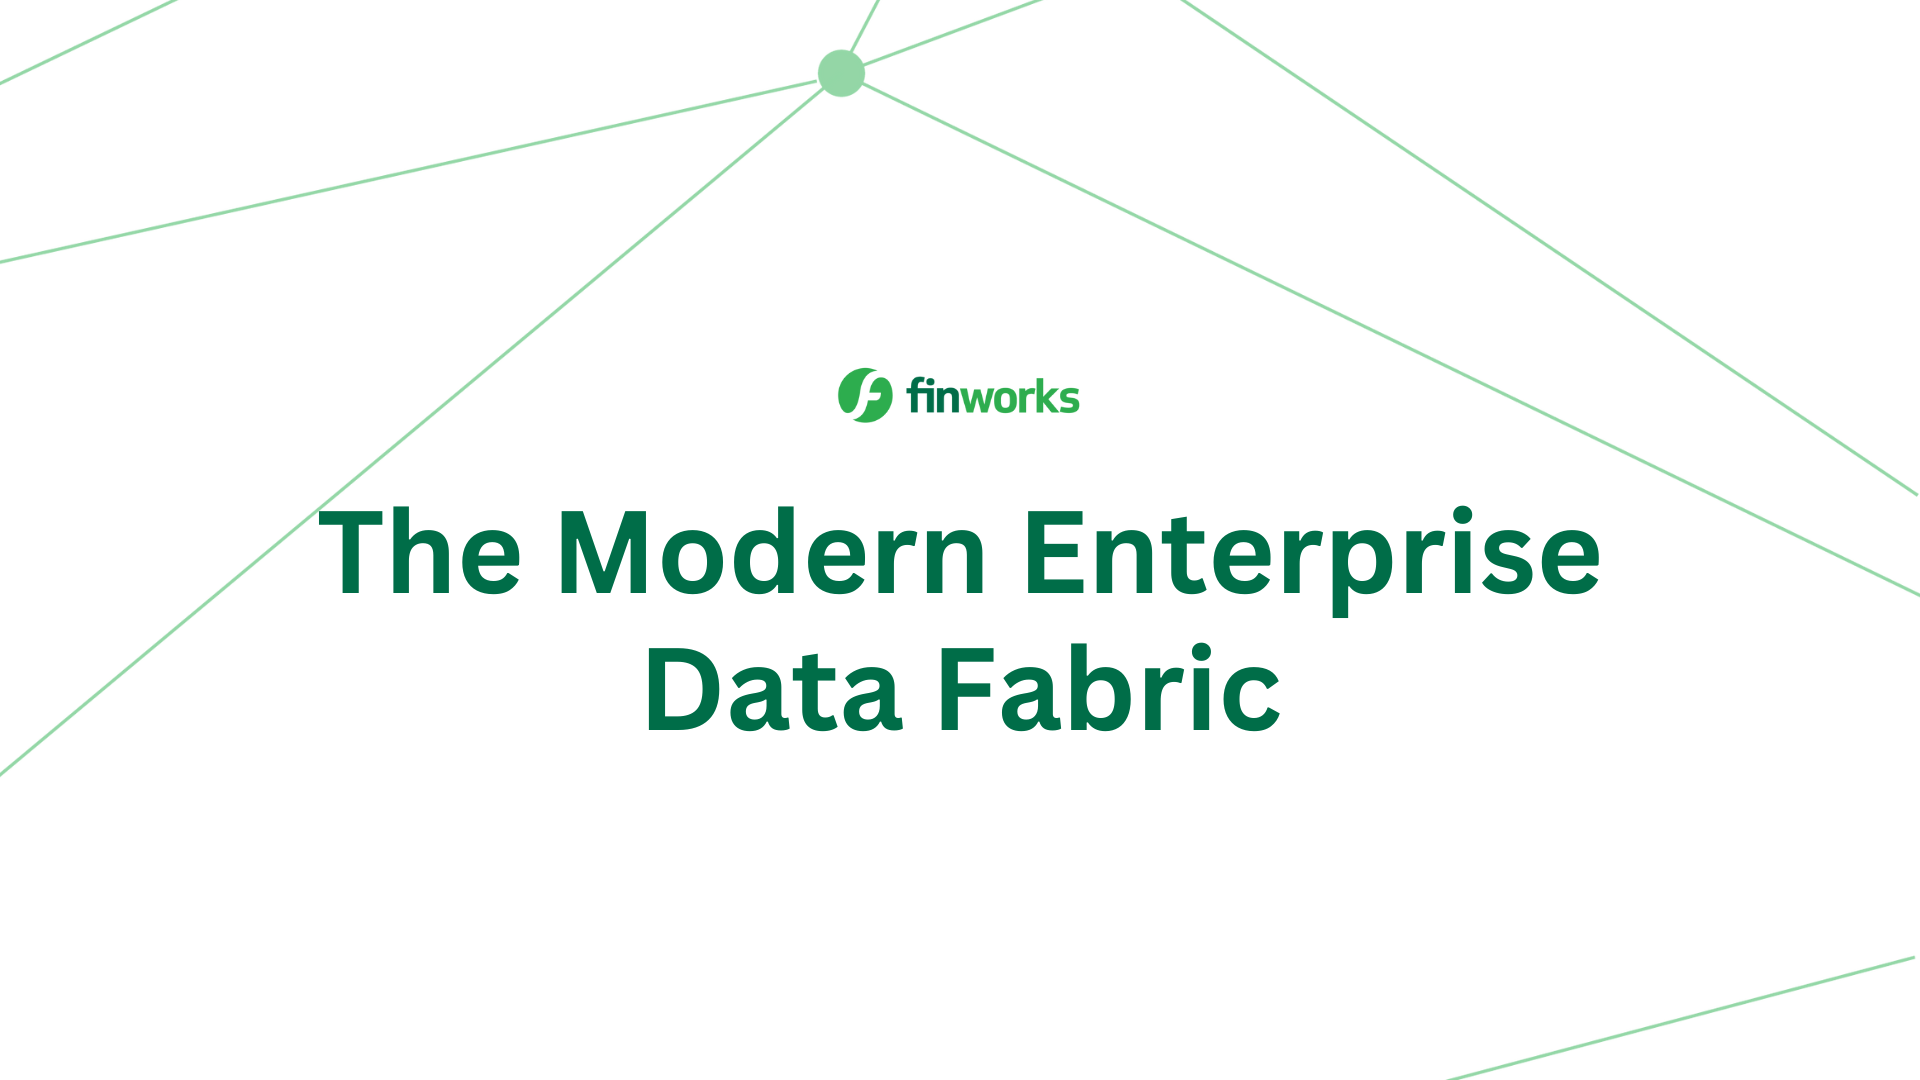 The Modern Enterprise Data Fabric